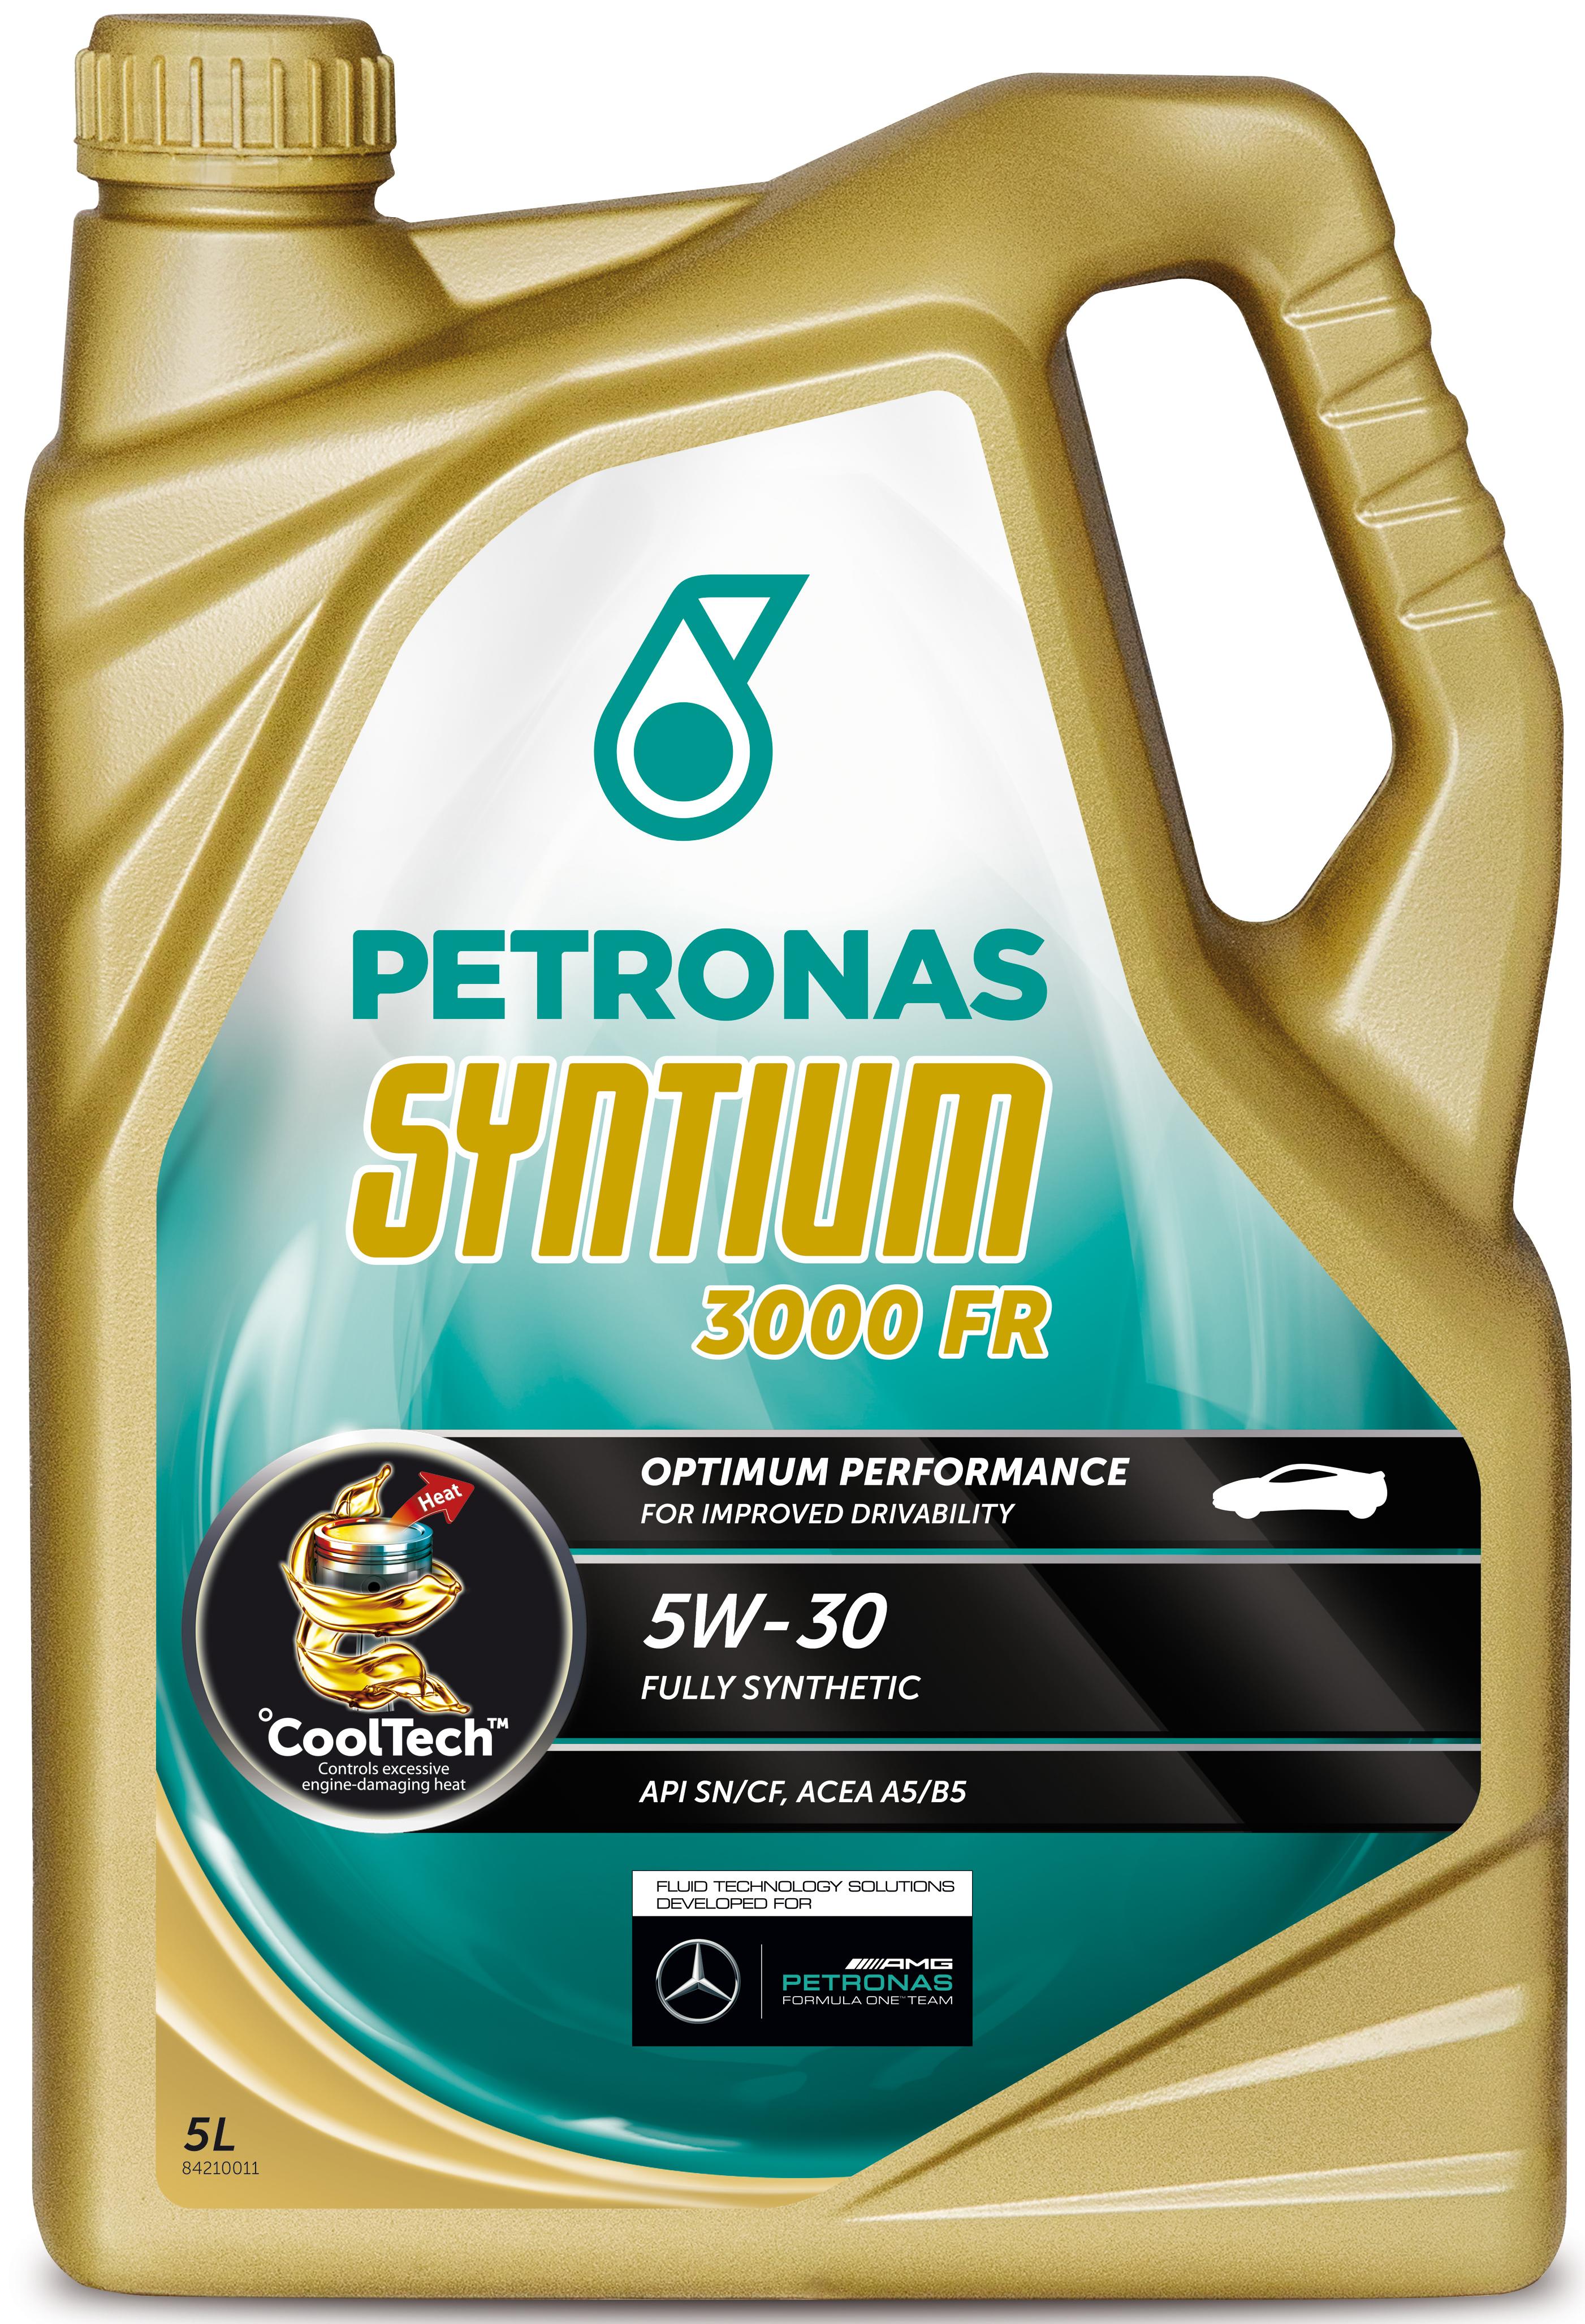 Petronas Syntium 3000 Fr 5W-30 Oil 5L